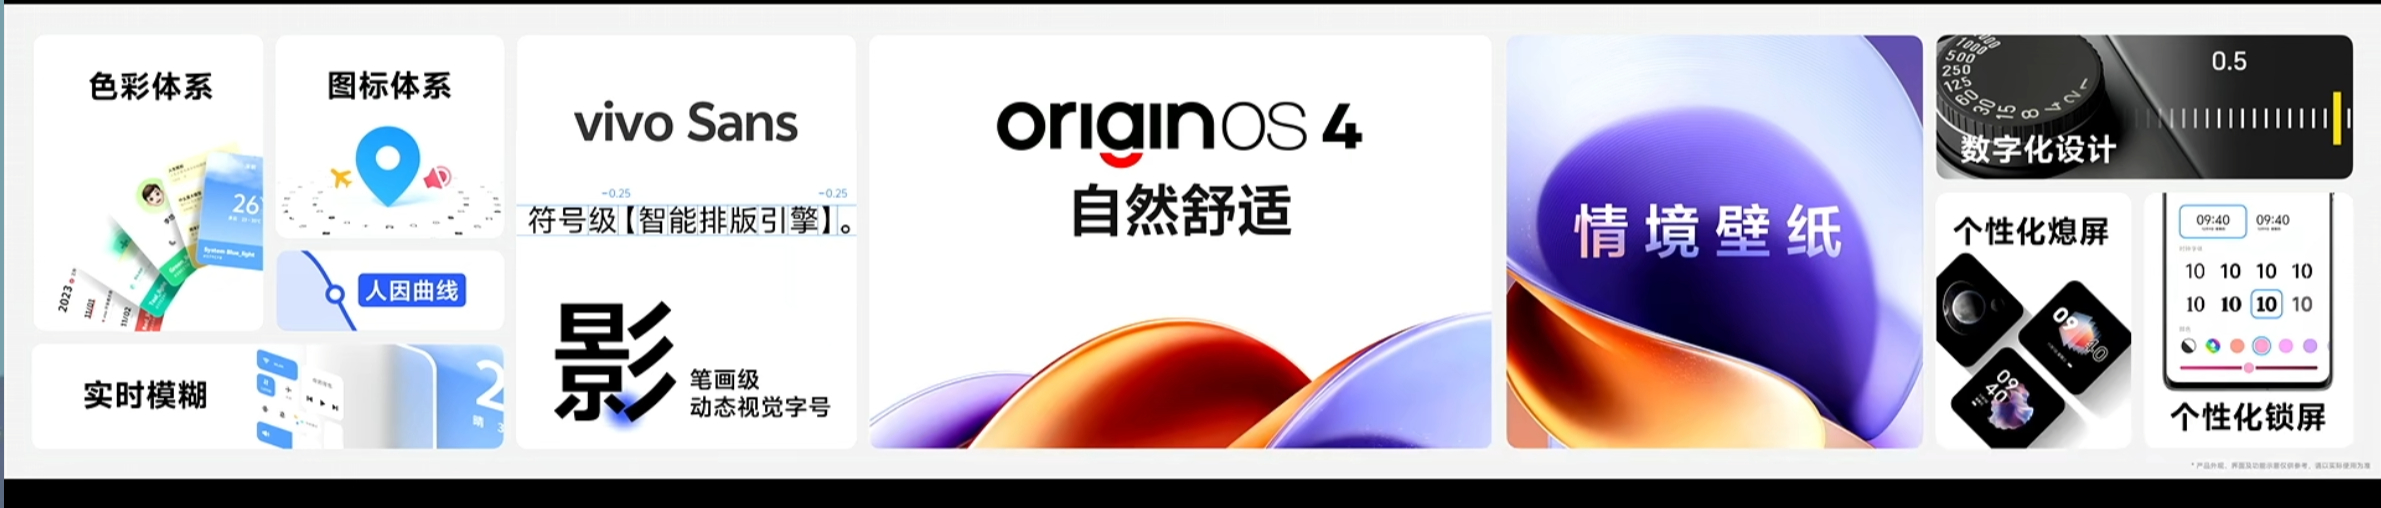 Originos. Originos 4. Originos 4.0.